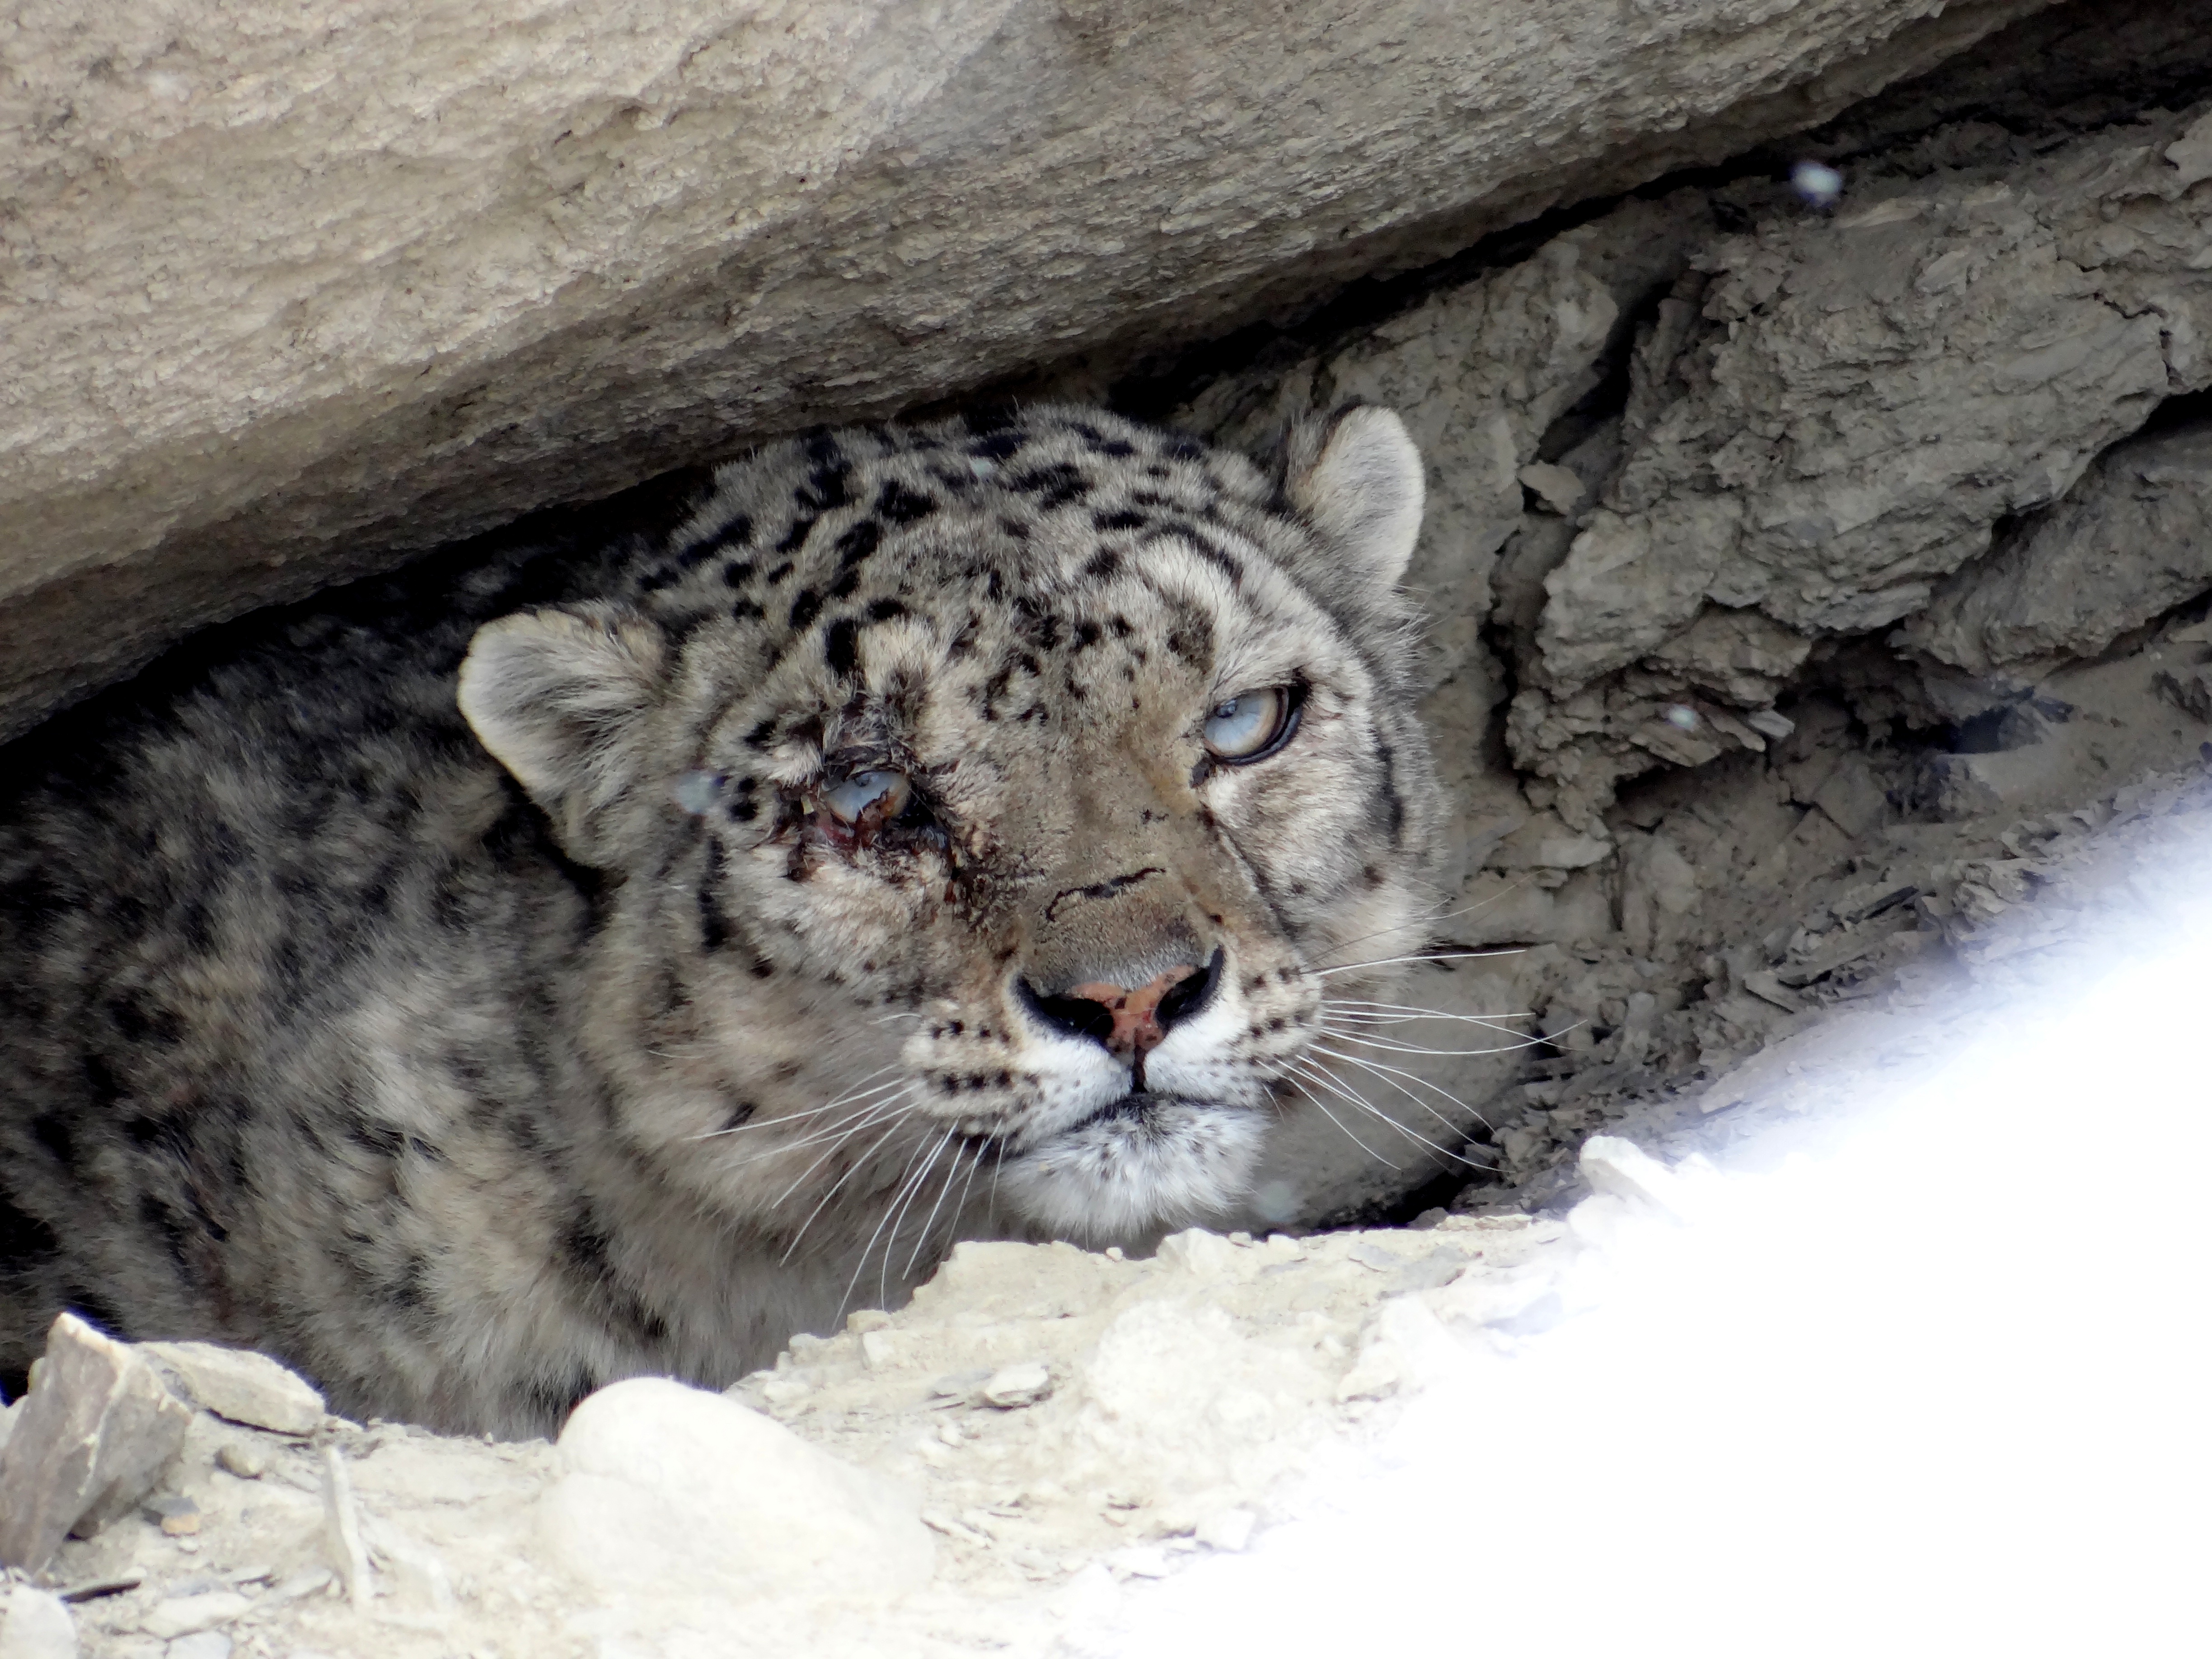 Snow Leopard Tour to Ladakh with Spituk Festival